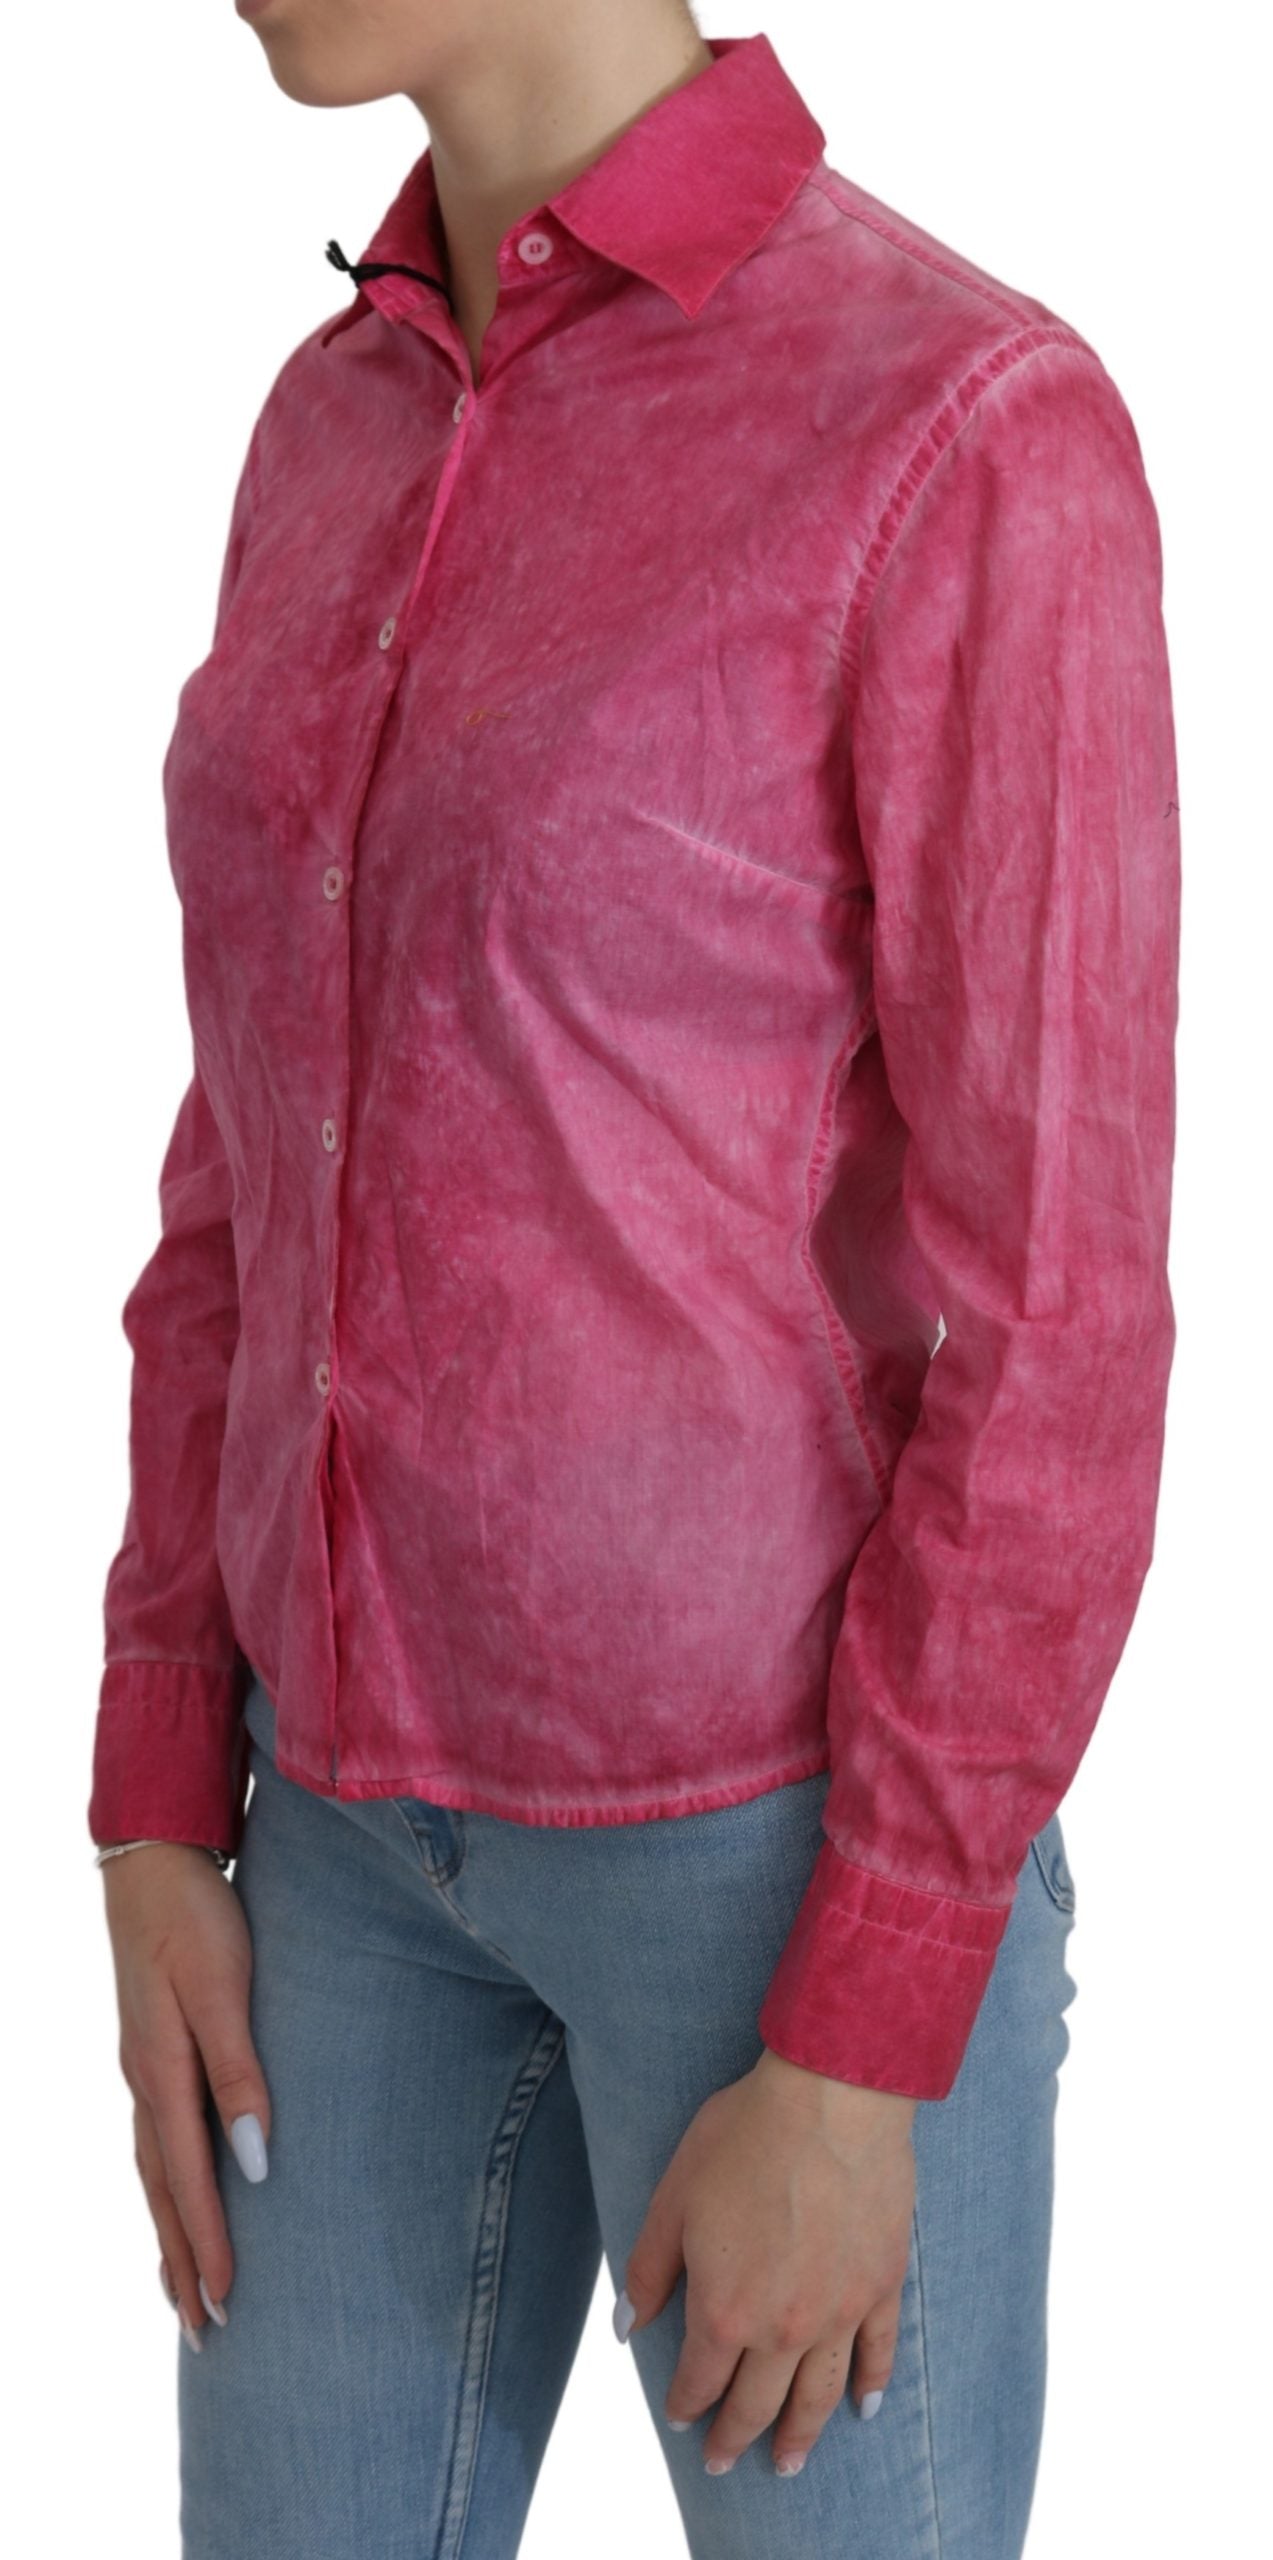 Pink Collared Long Sleeve Shirt Blouse Top